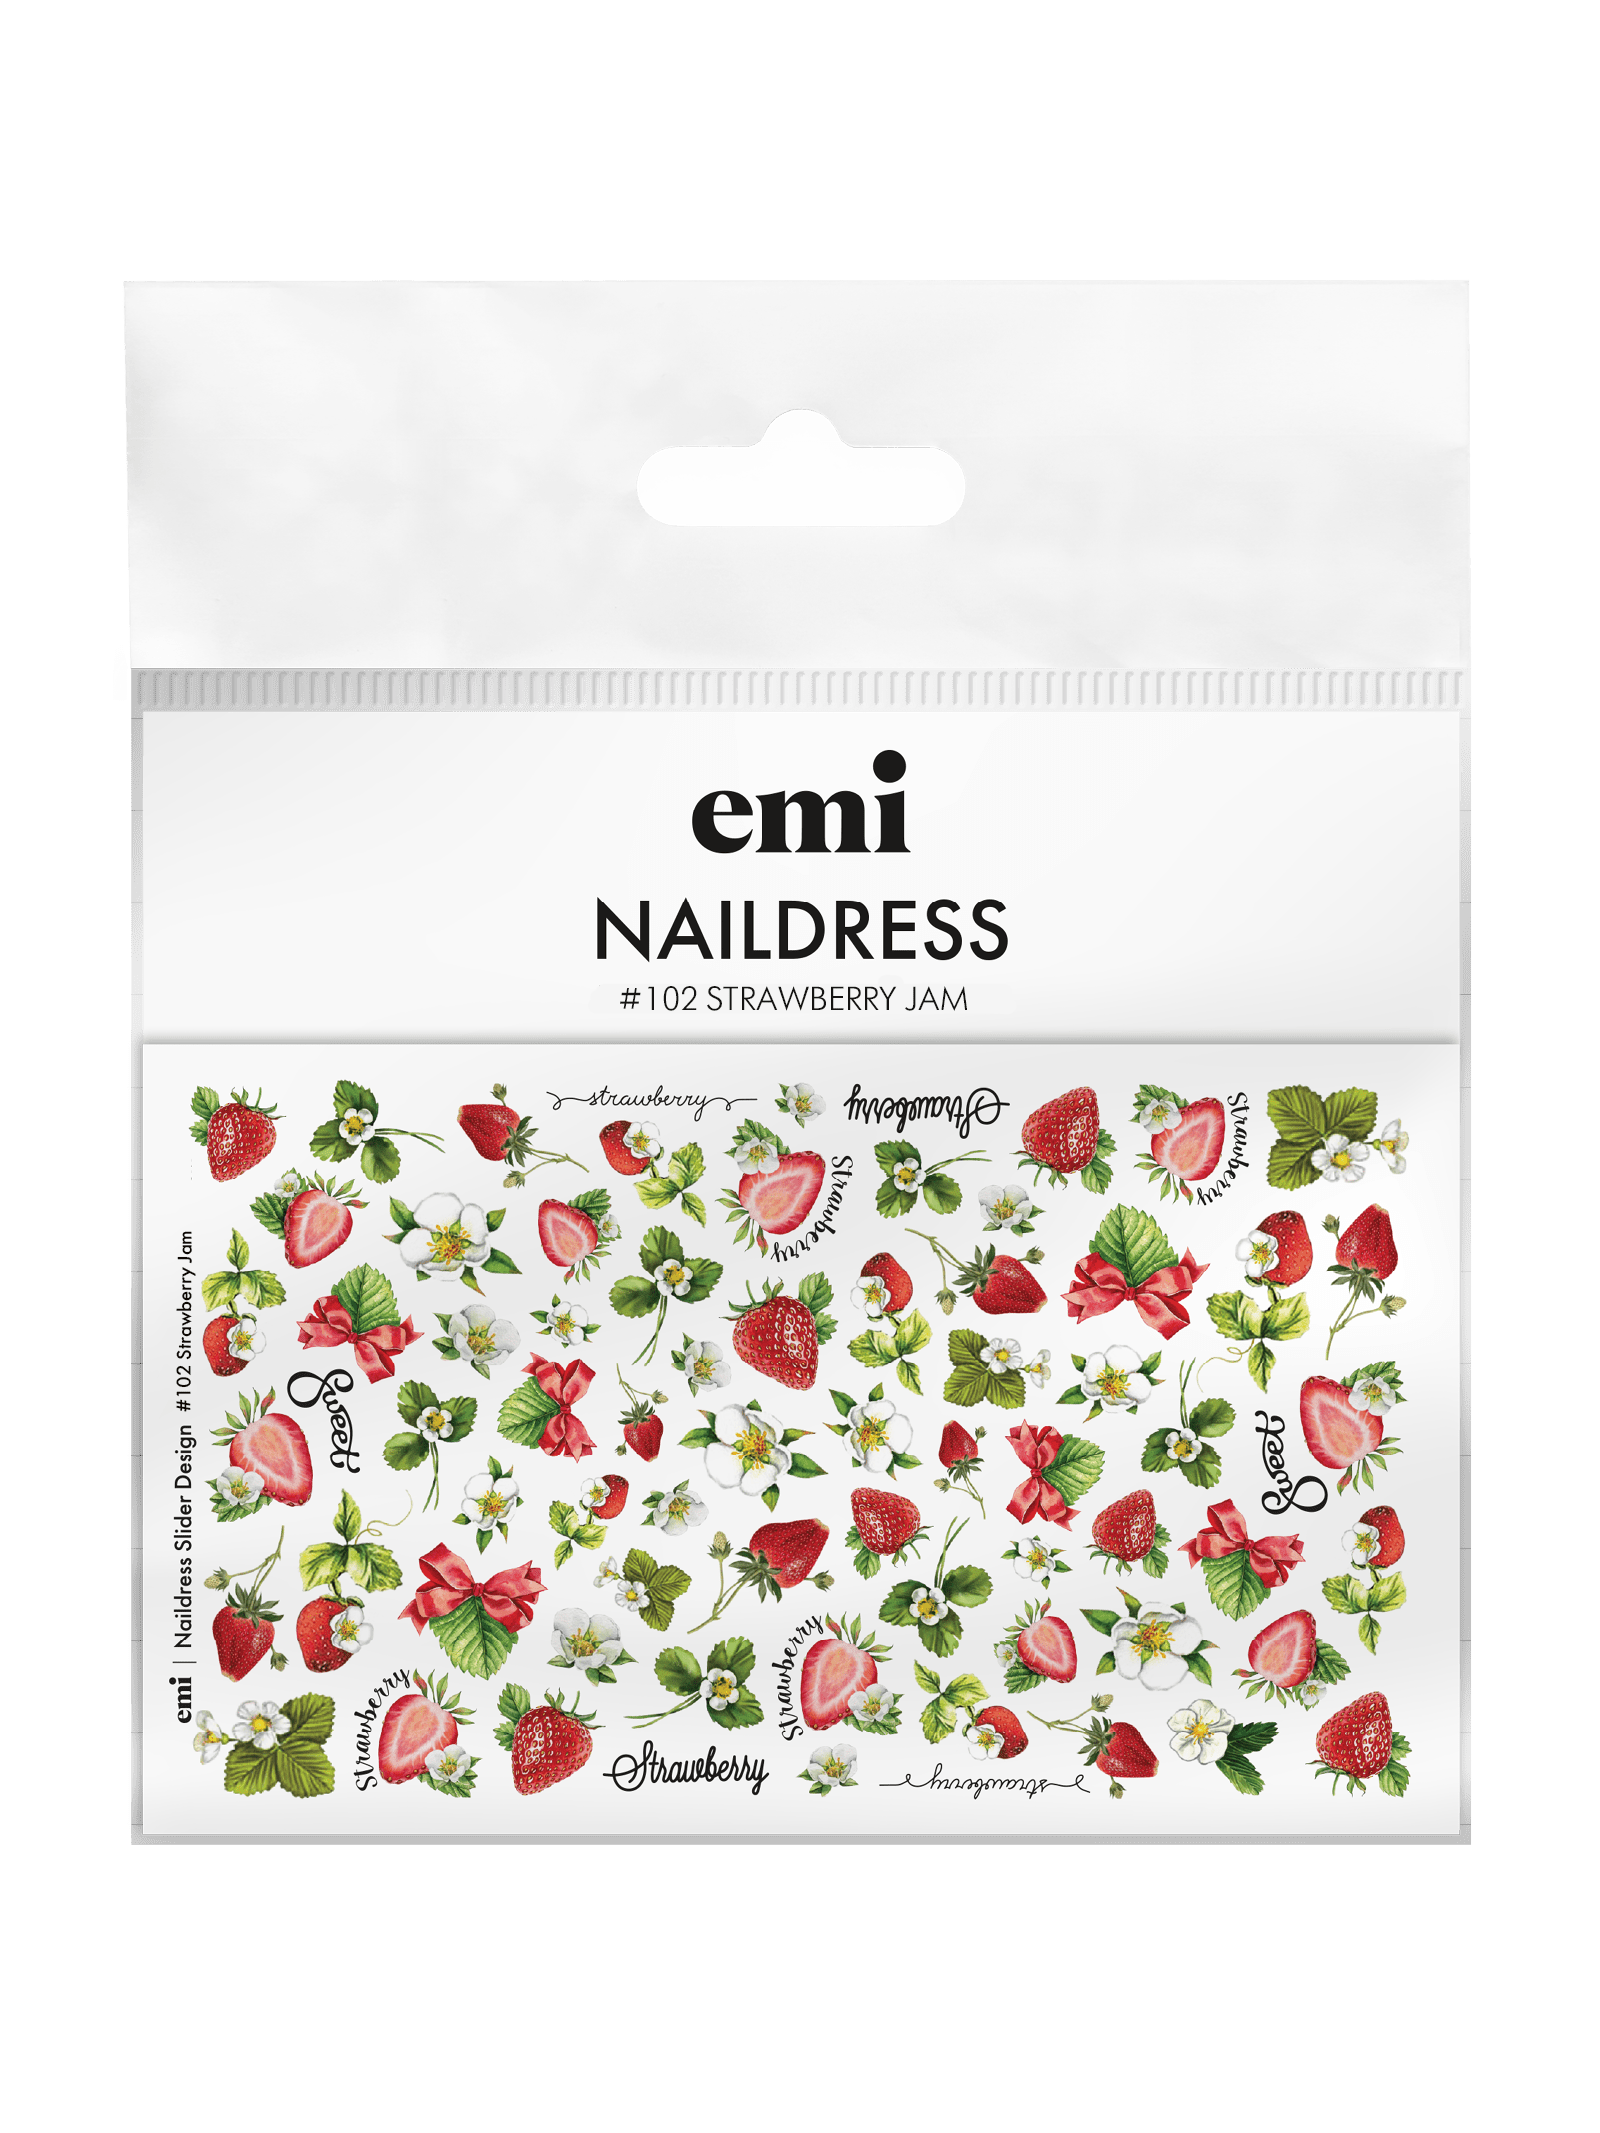 Naildress / Nail Decal Design #102 Strawberry Jam